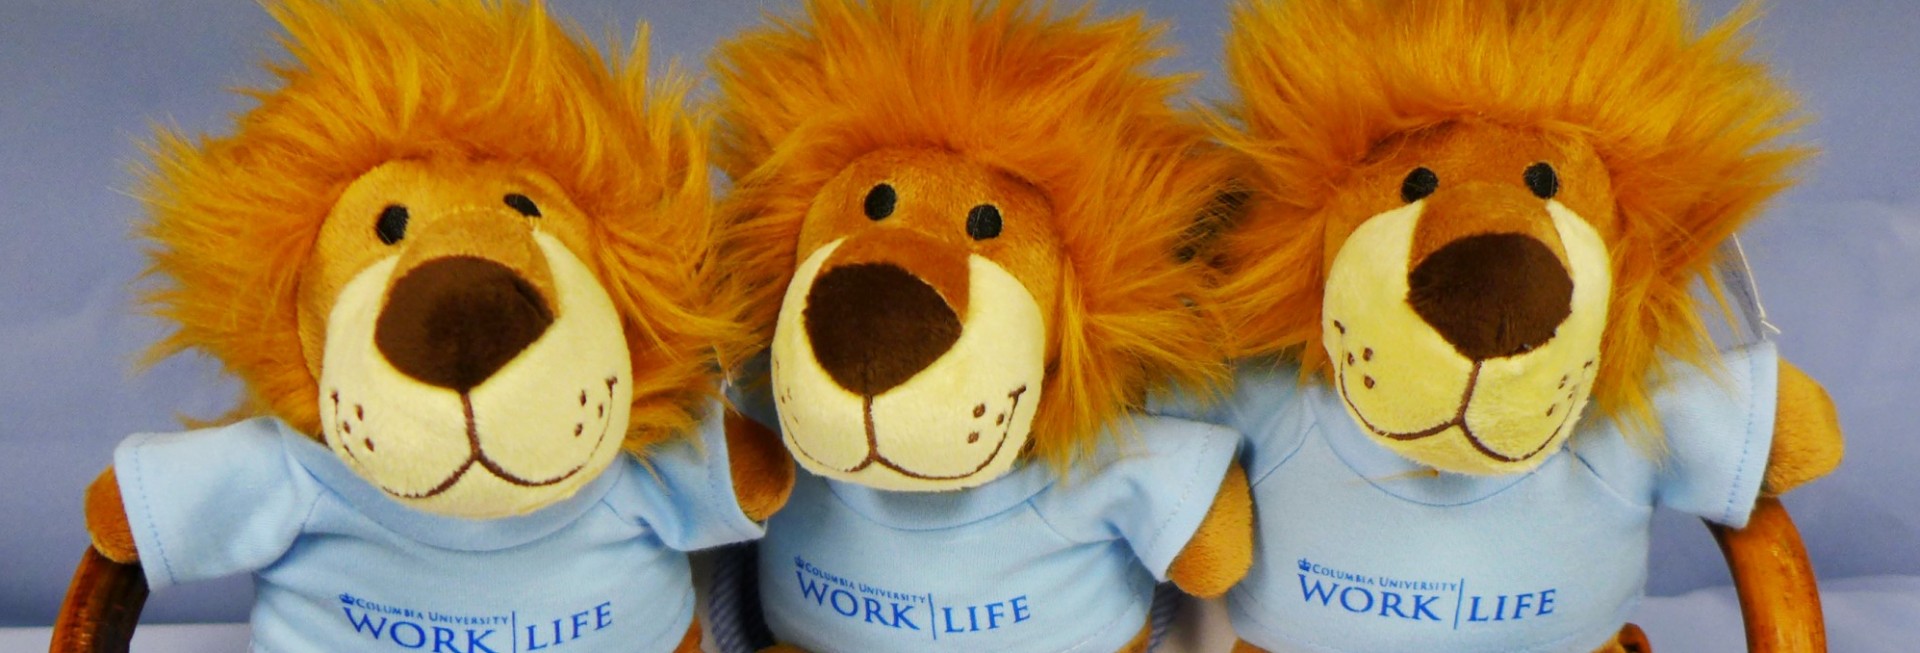 Work/Life Lions 